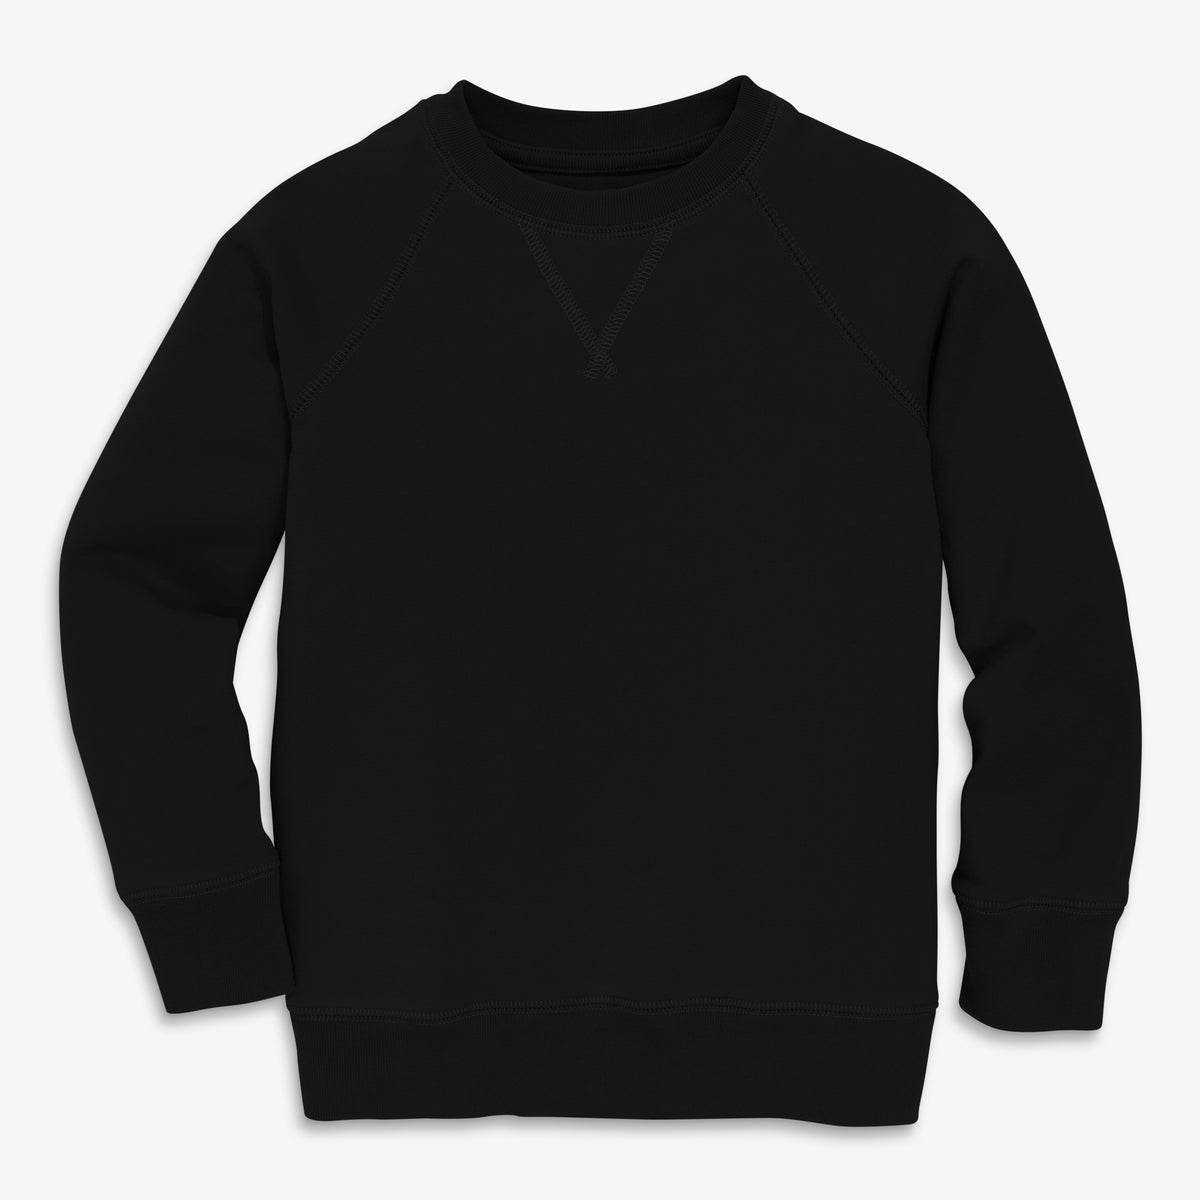 The Sweatshirt | Primary.com